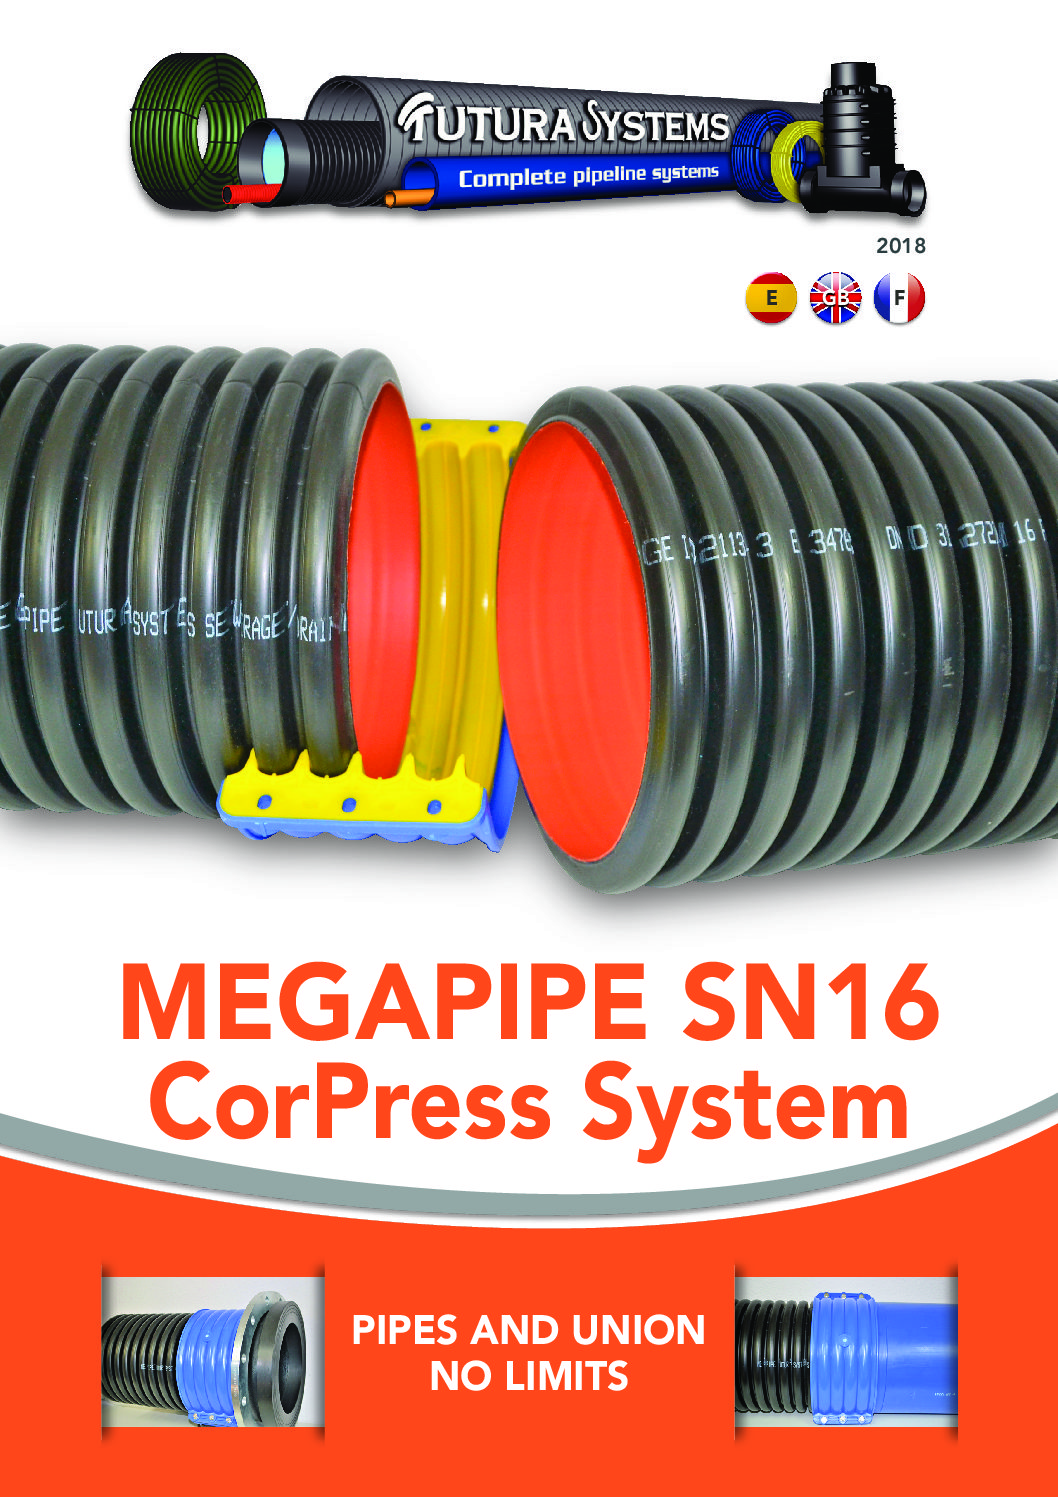 futura-systems-megapipe-corpress-sn16-polipropileno